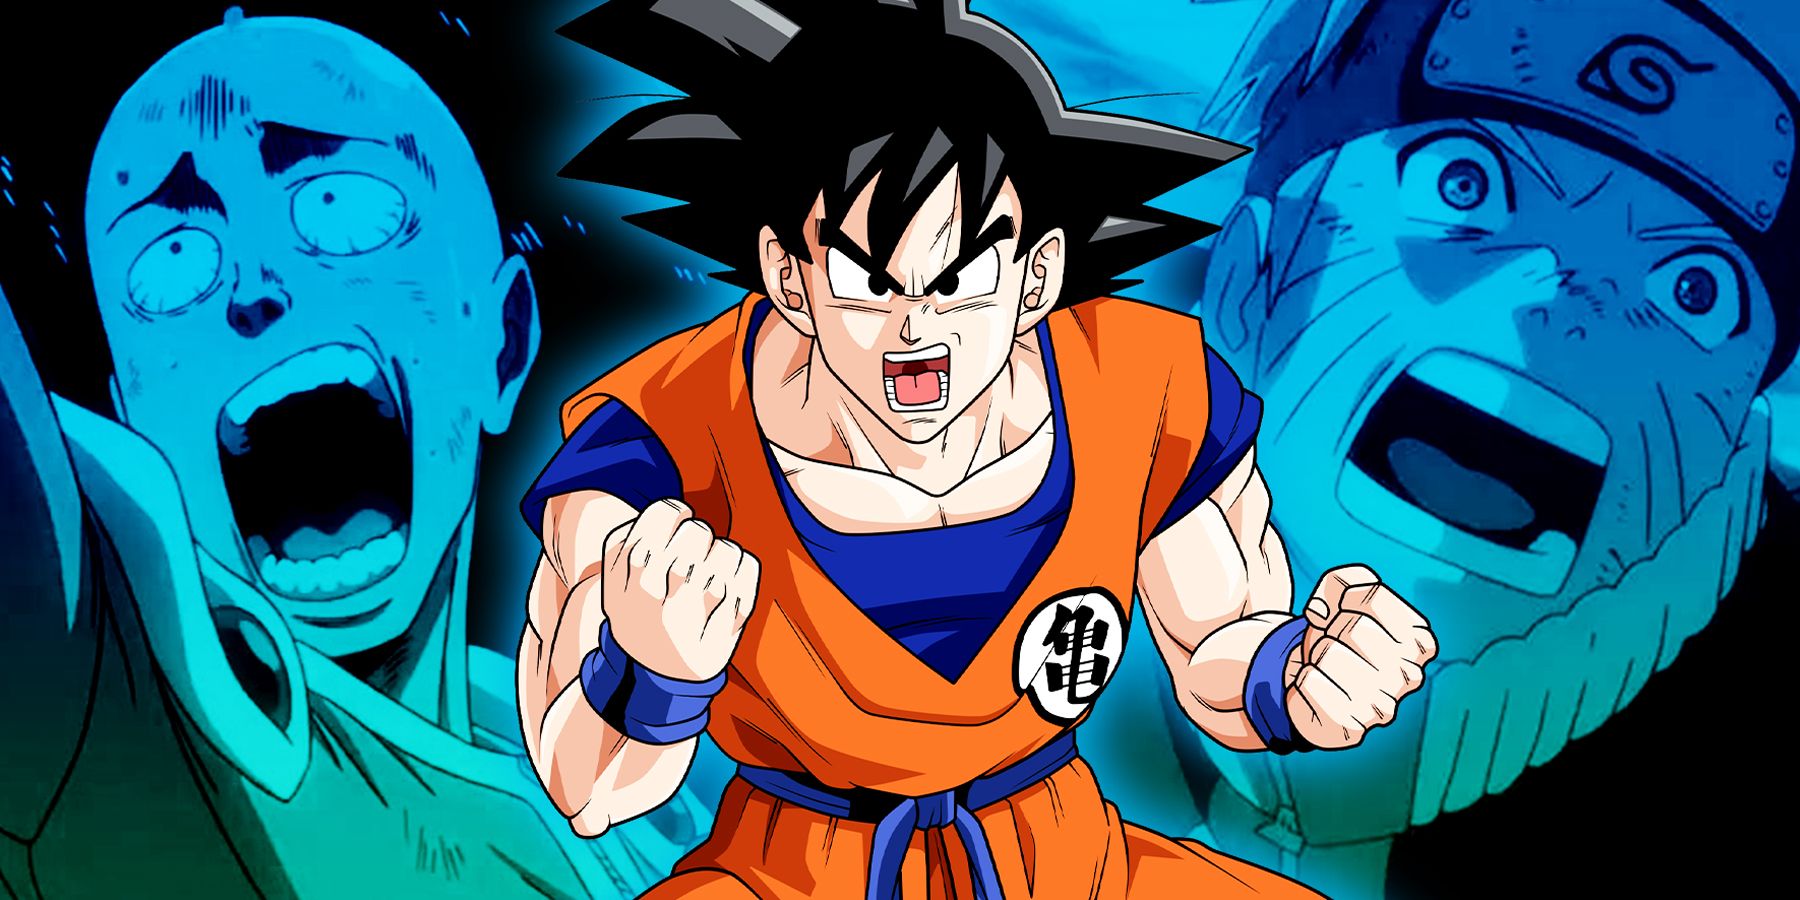 DBZ's Goku striking a fighting pose with Saitama and Naruto on either side of him.